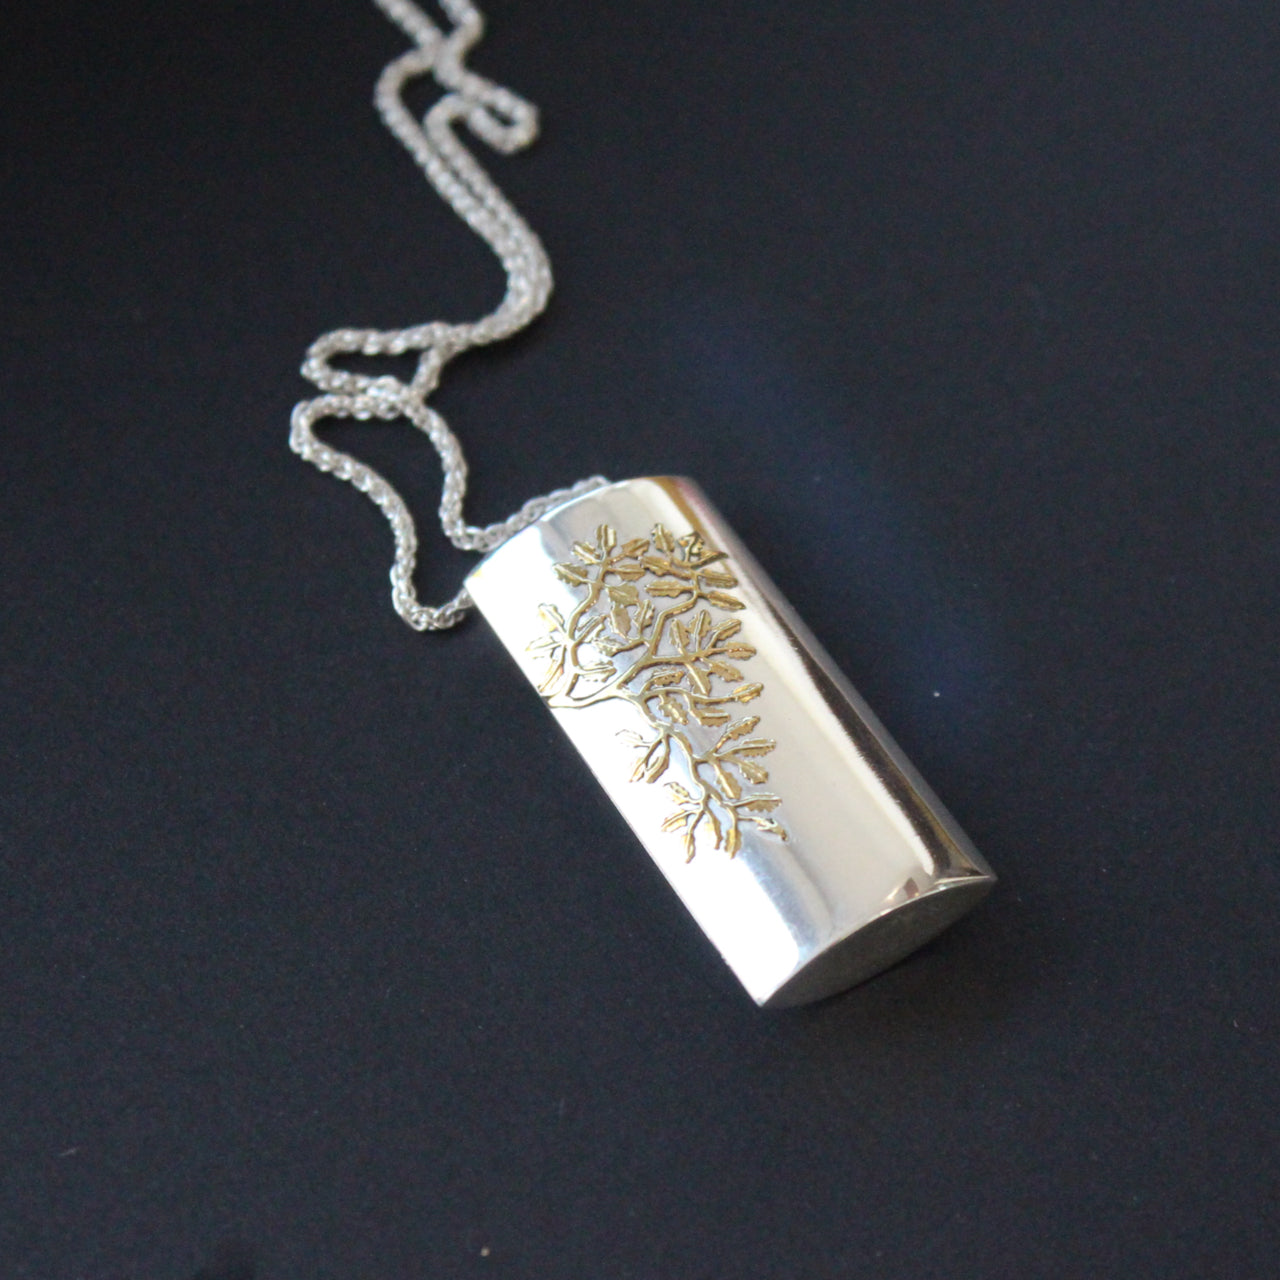 Silver box pendant with flower design by UK artist Beverly Bartlett